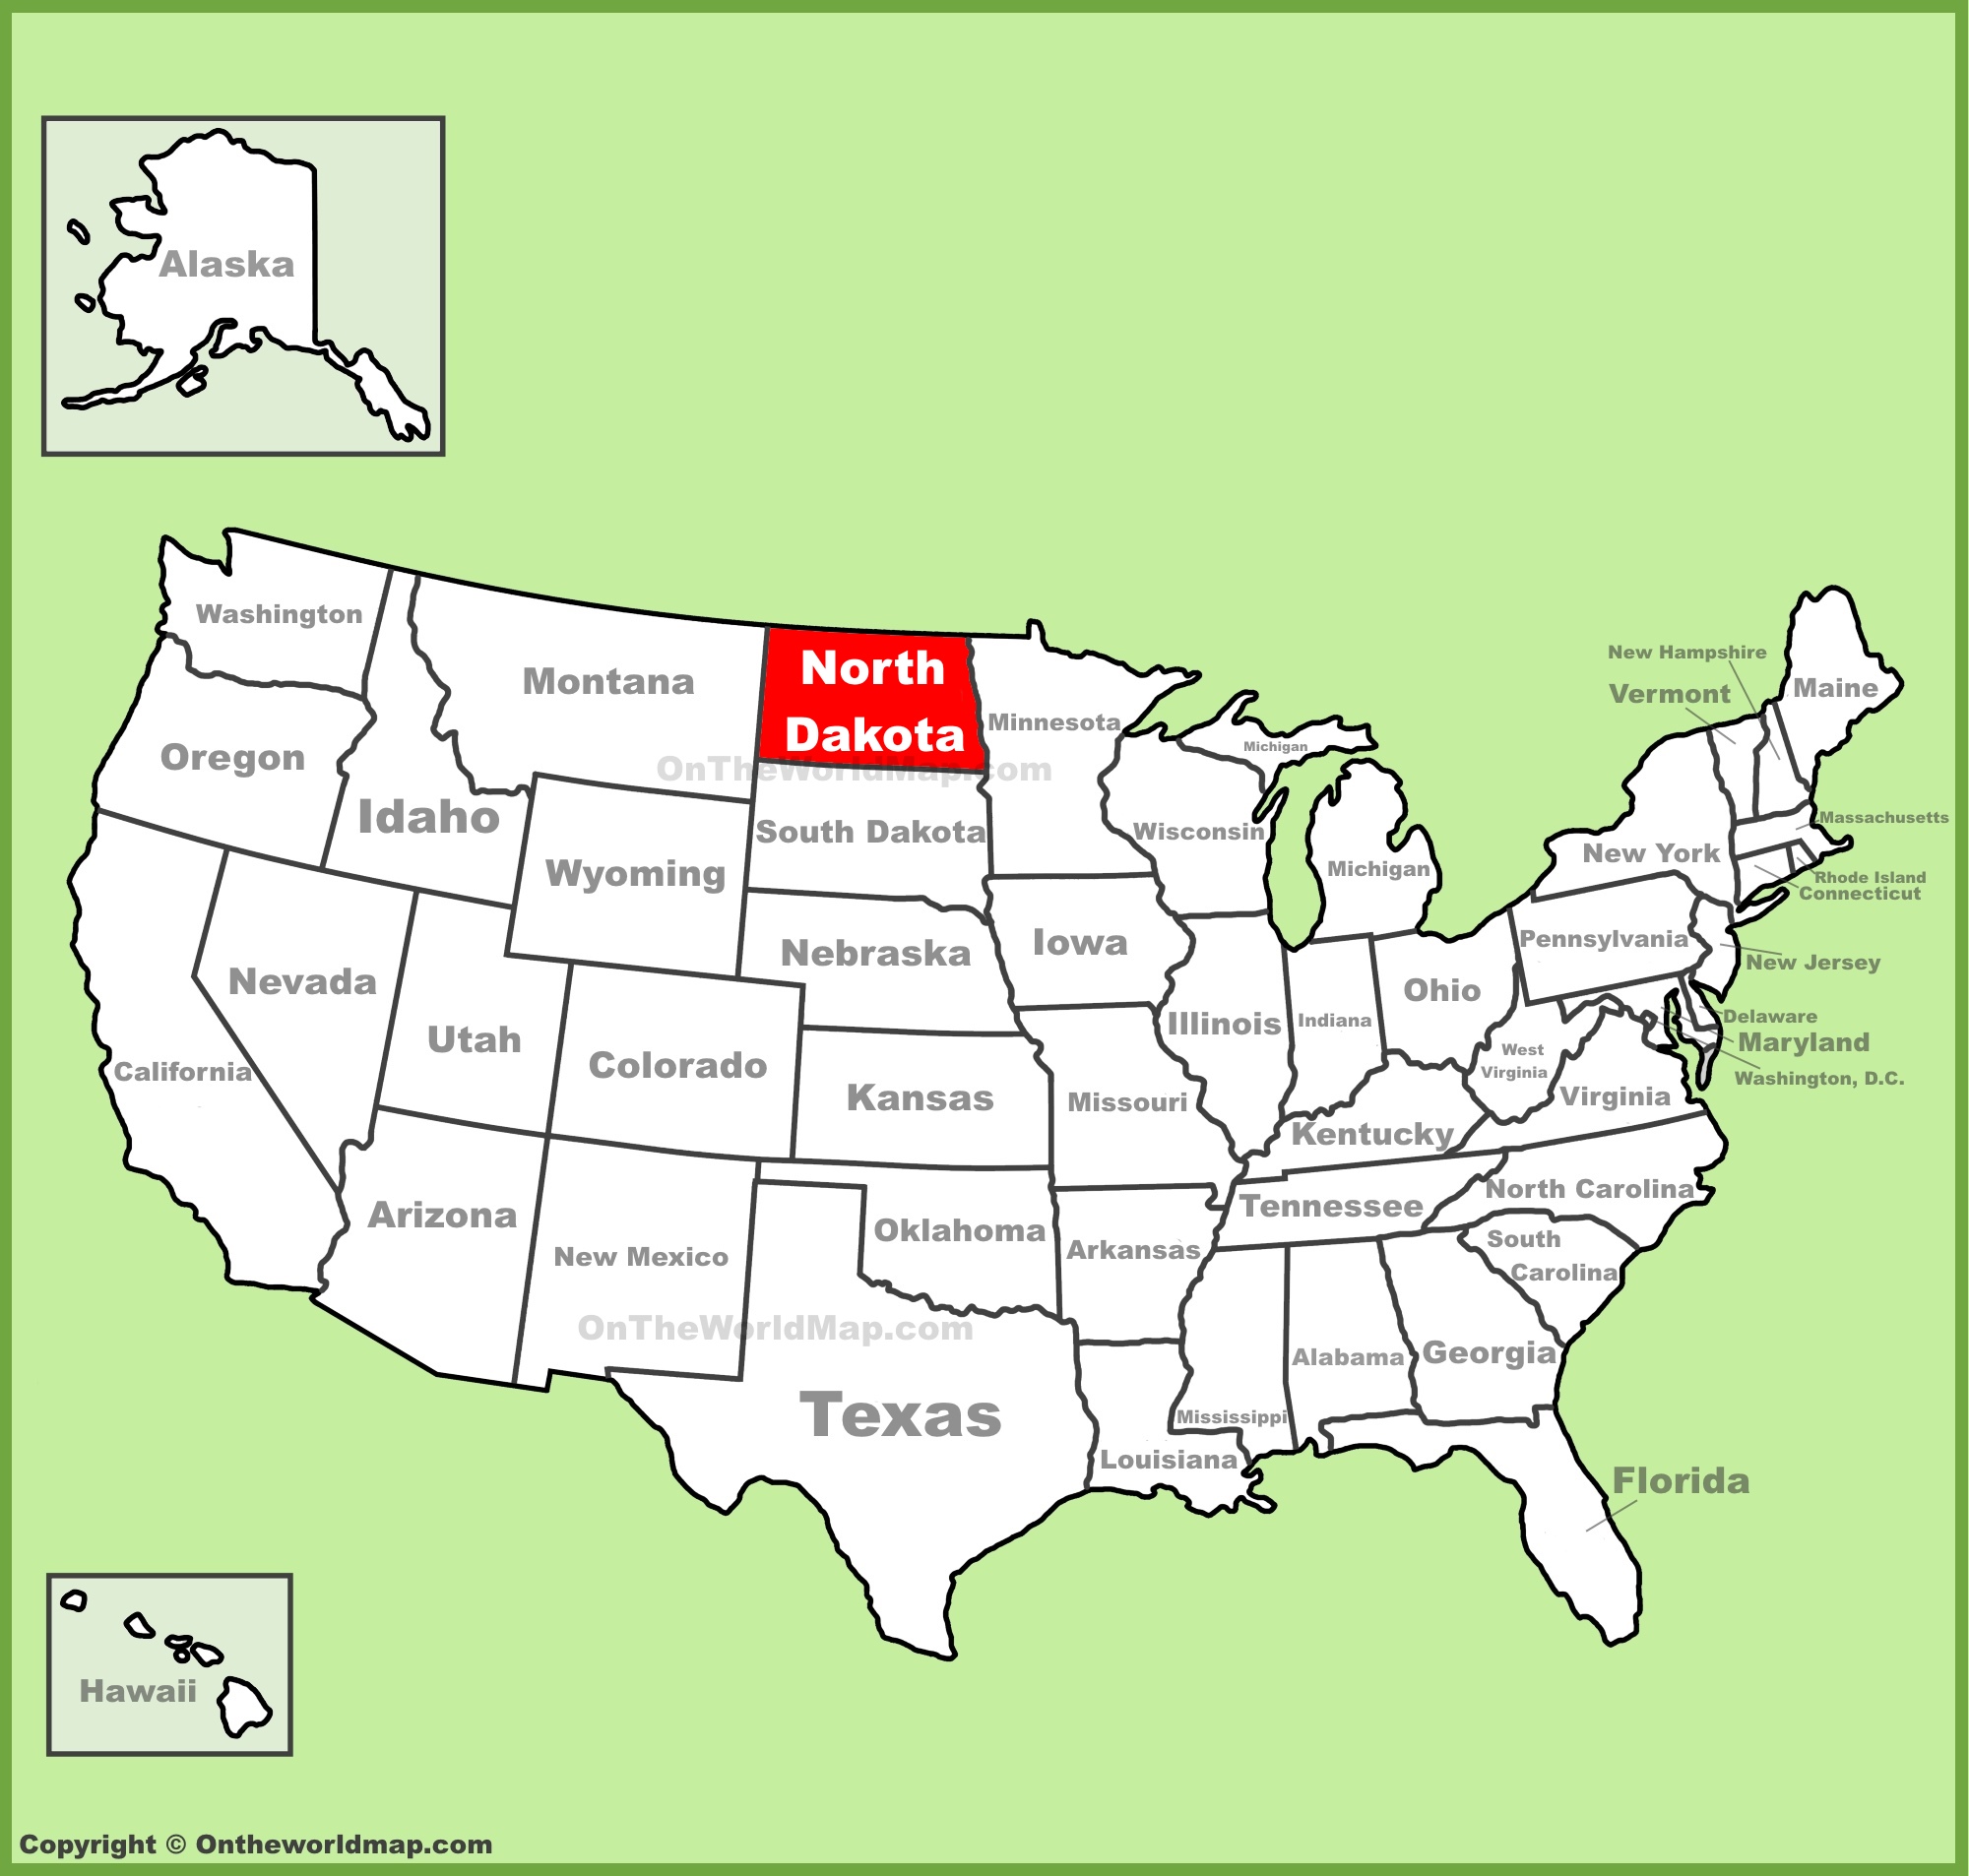 North Dakota Location On The Us Map 